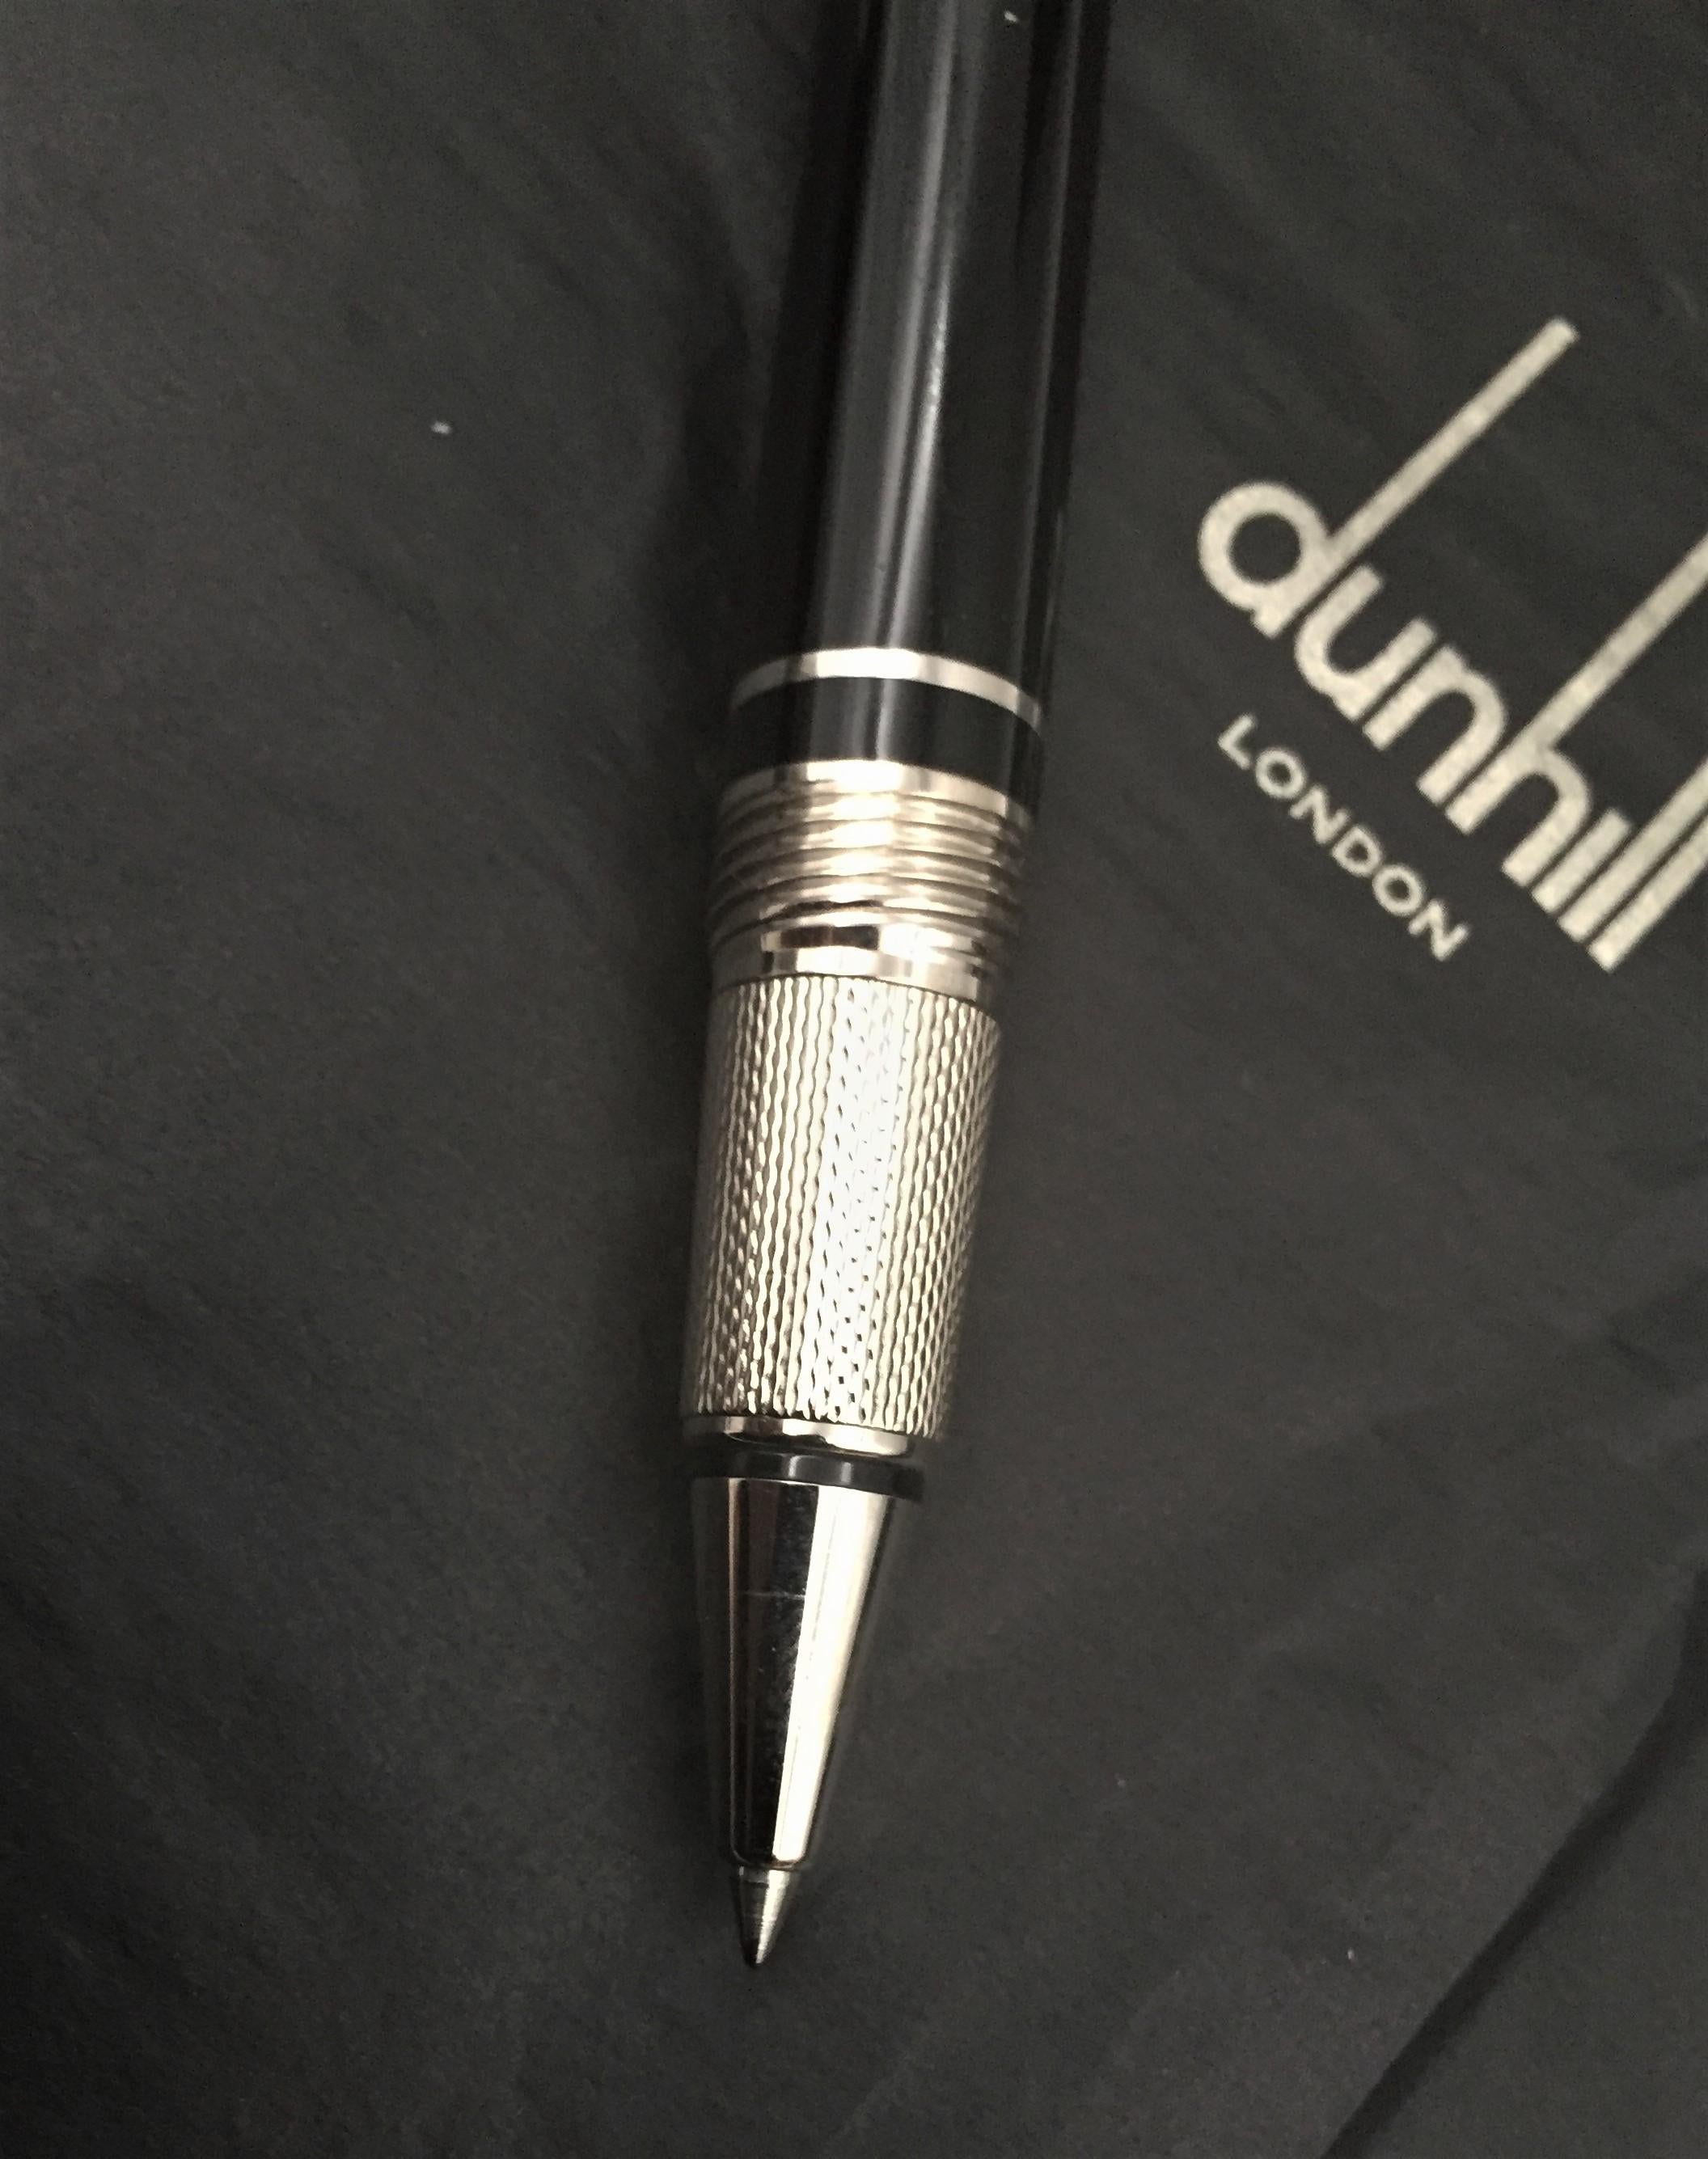 dunhill sidecar pen